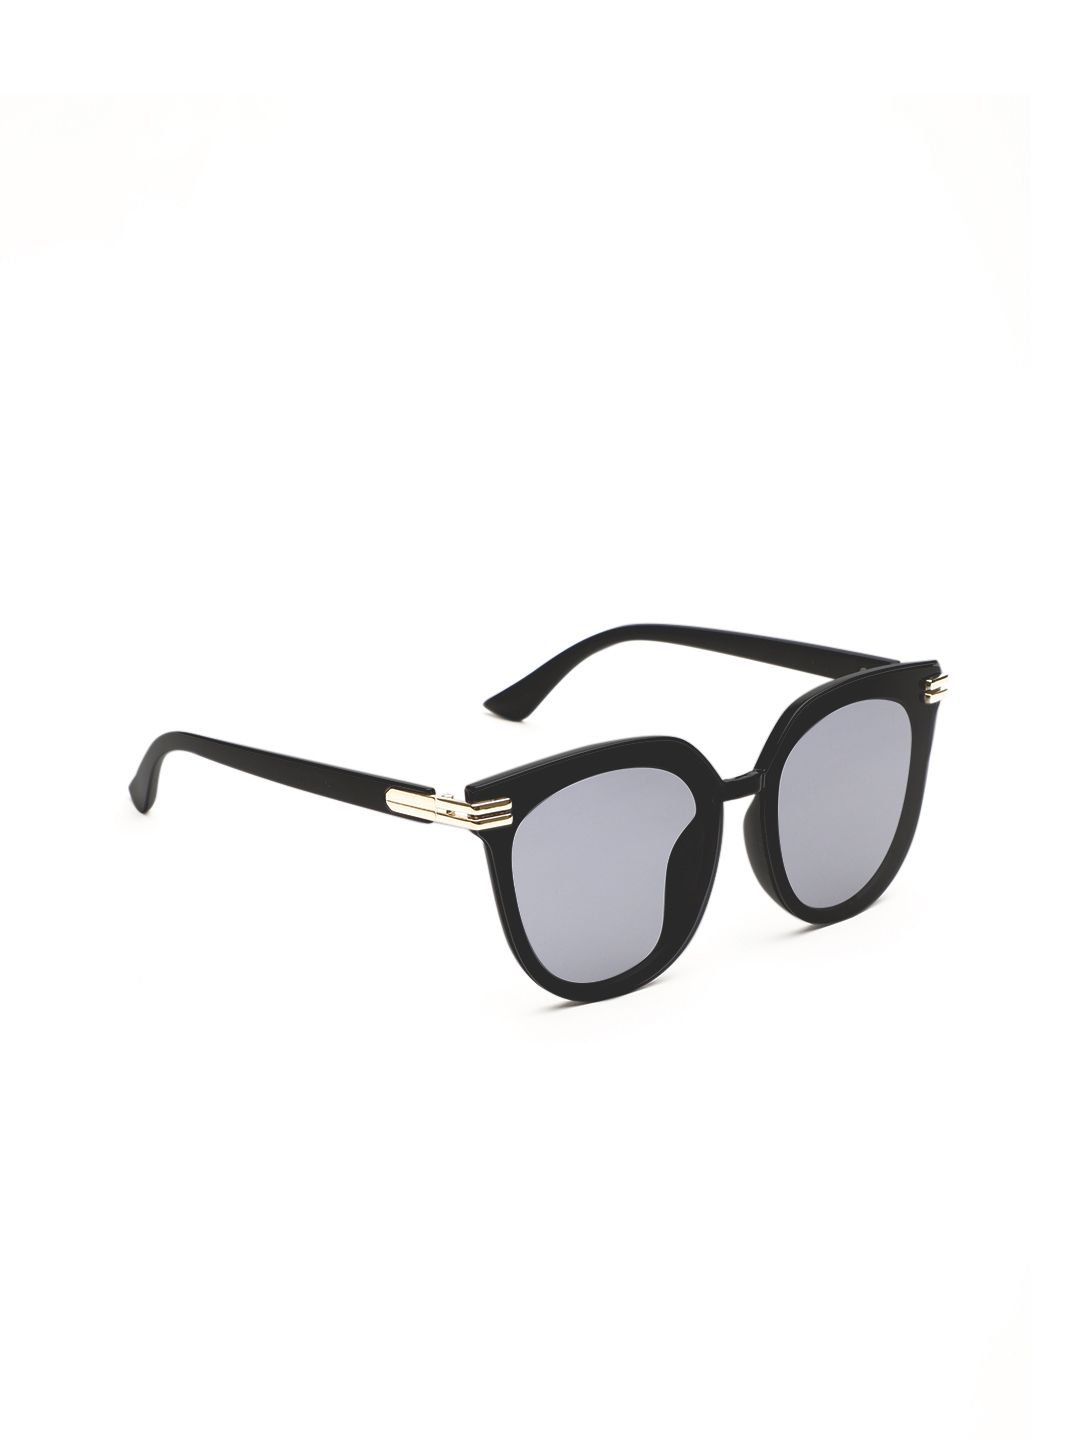 Carlton London Women Oval Sunglasses Price in India